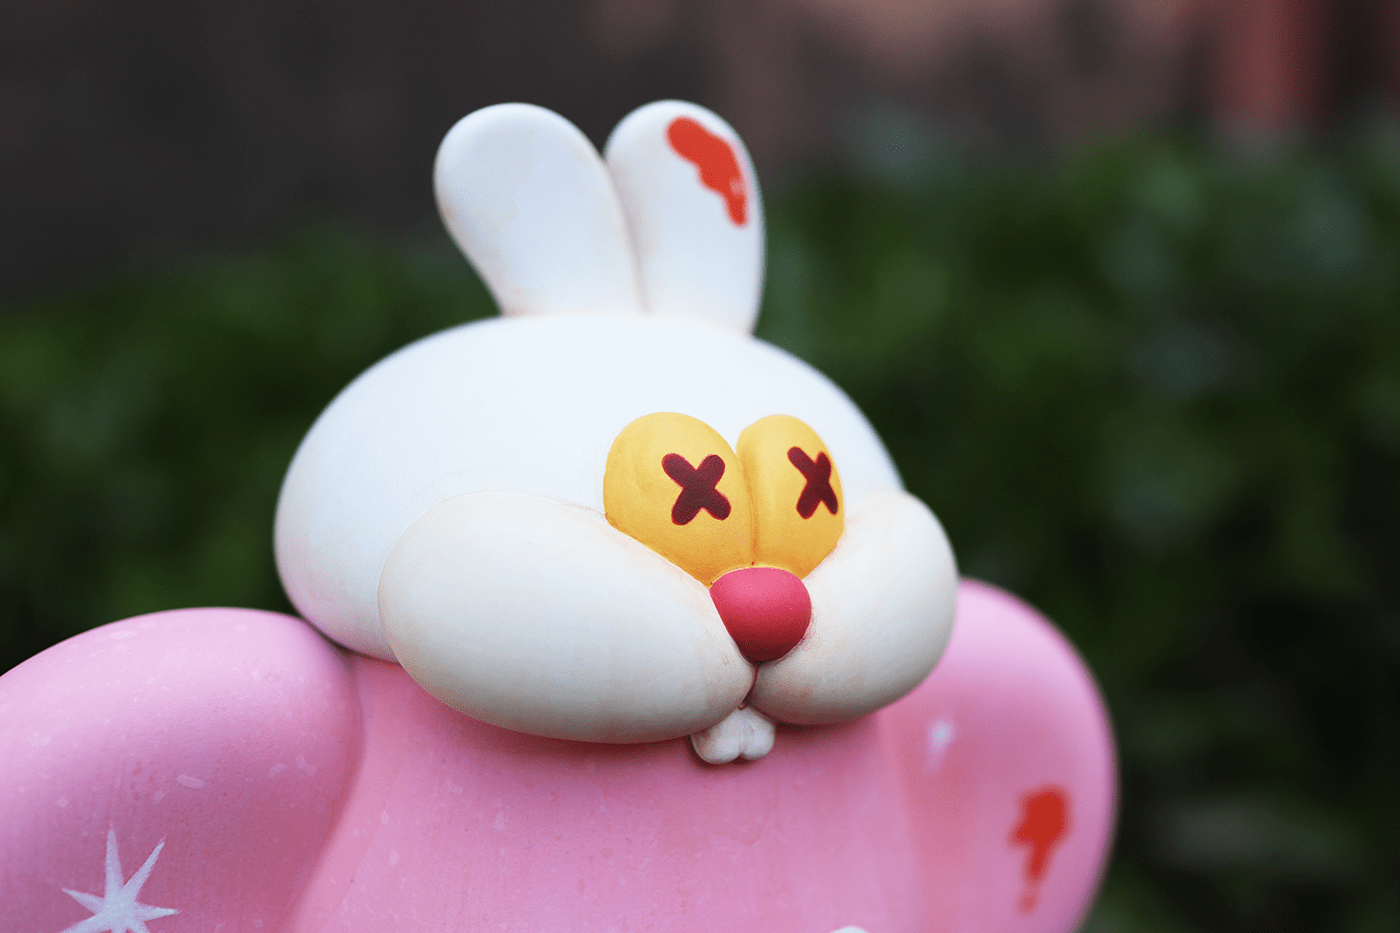 arttoy Character designertoy figure rabbit resintoy